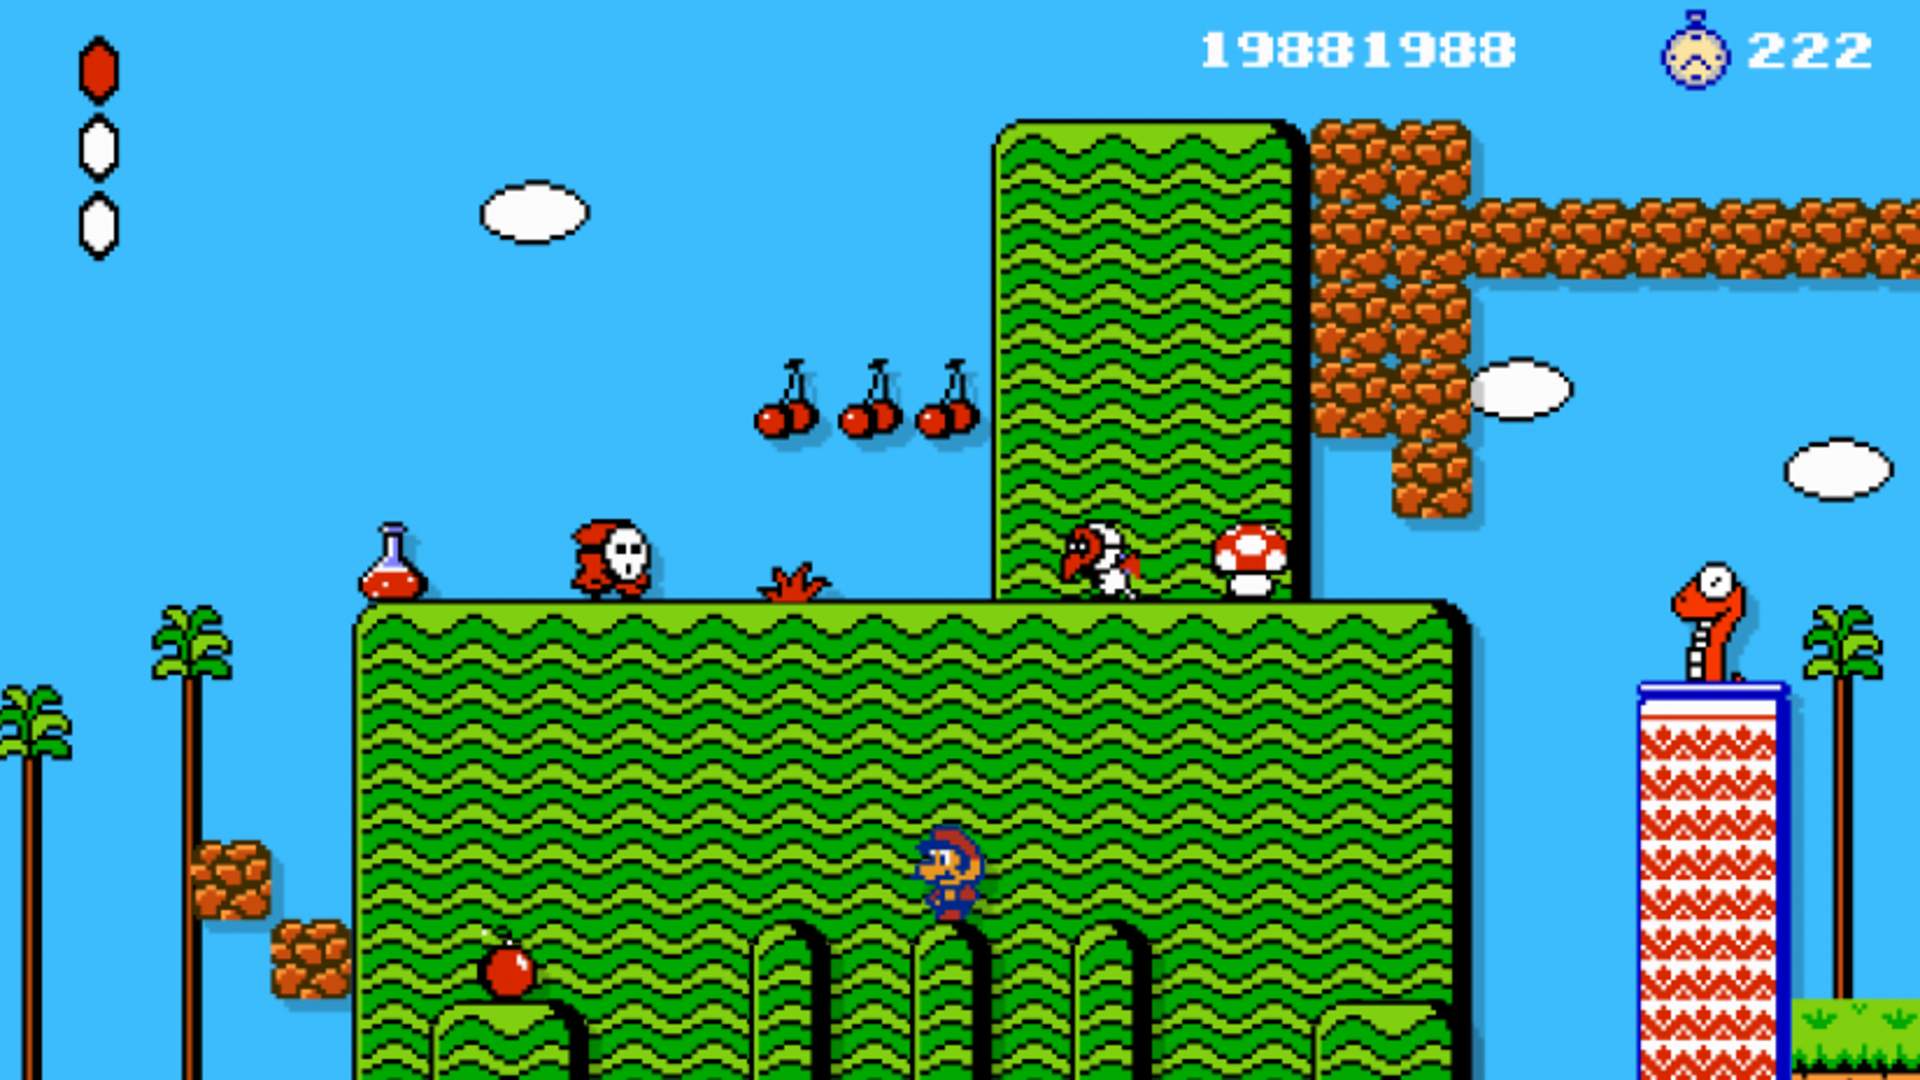 Nintendo Switch's February NES Classics are Kirby's